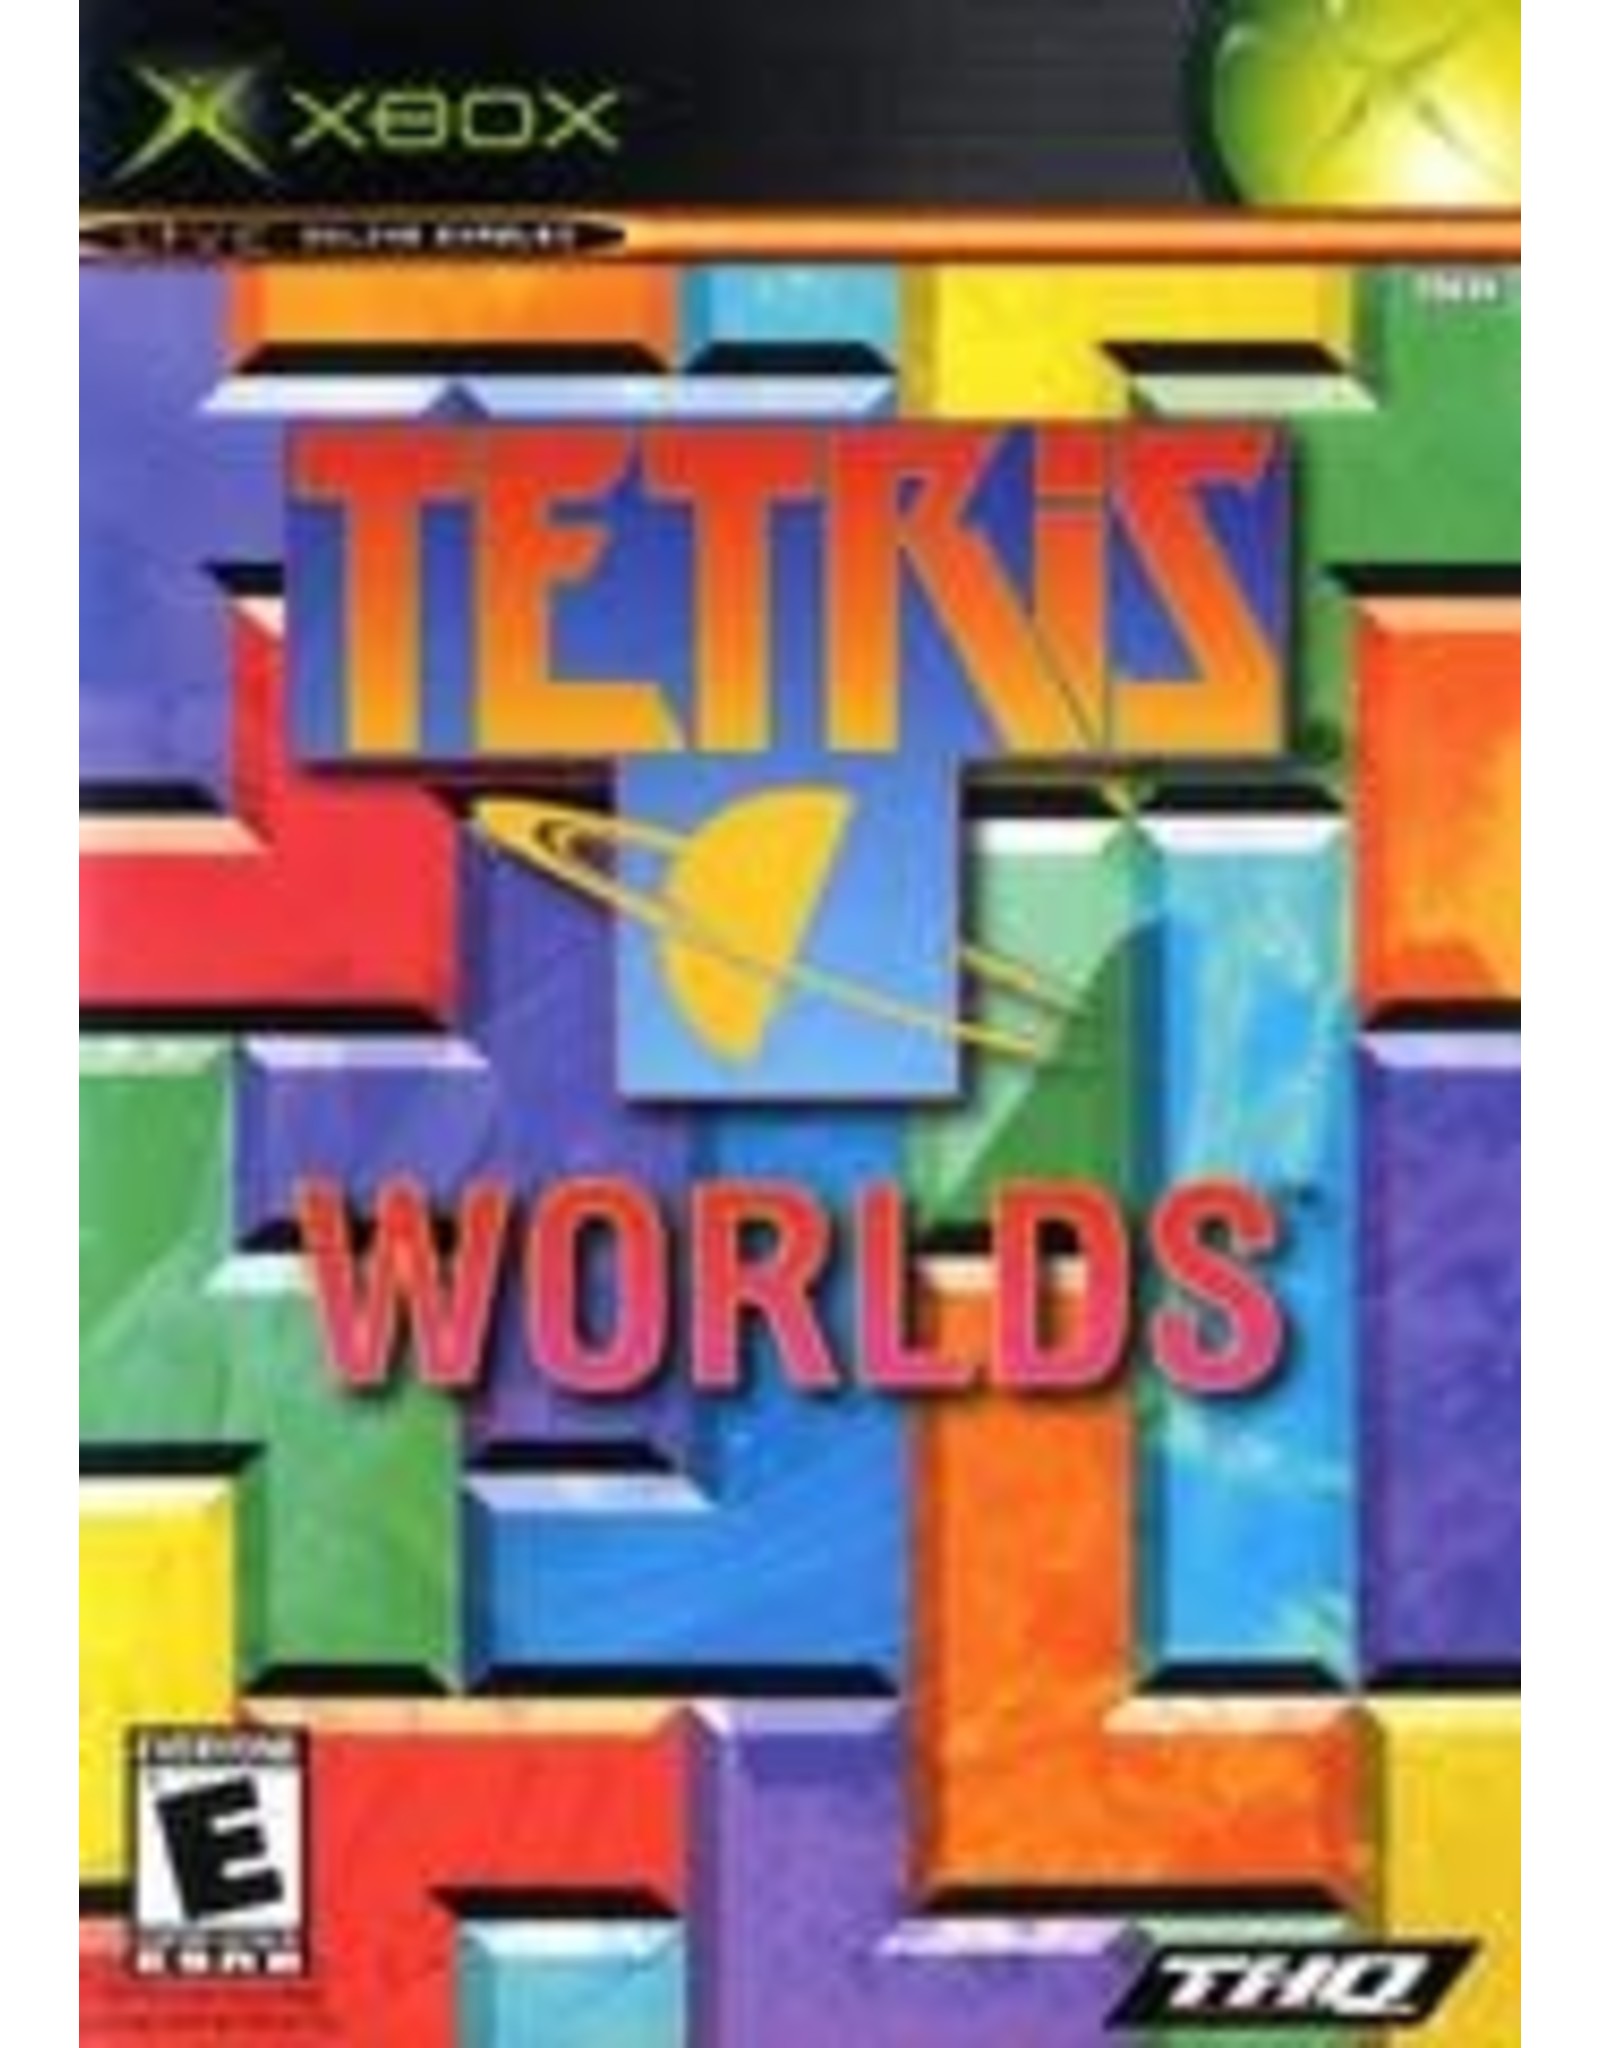 Xbox Star Wars Clone Wars Tetris Worlds Combo Pack (CiB)